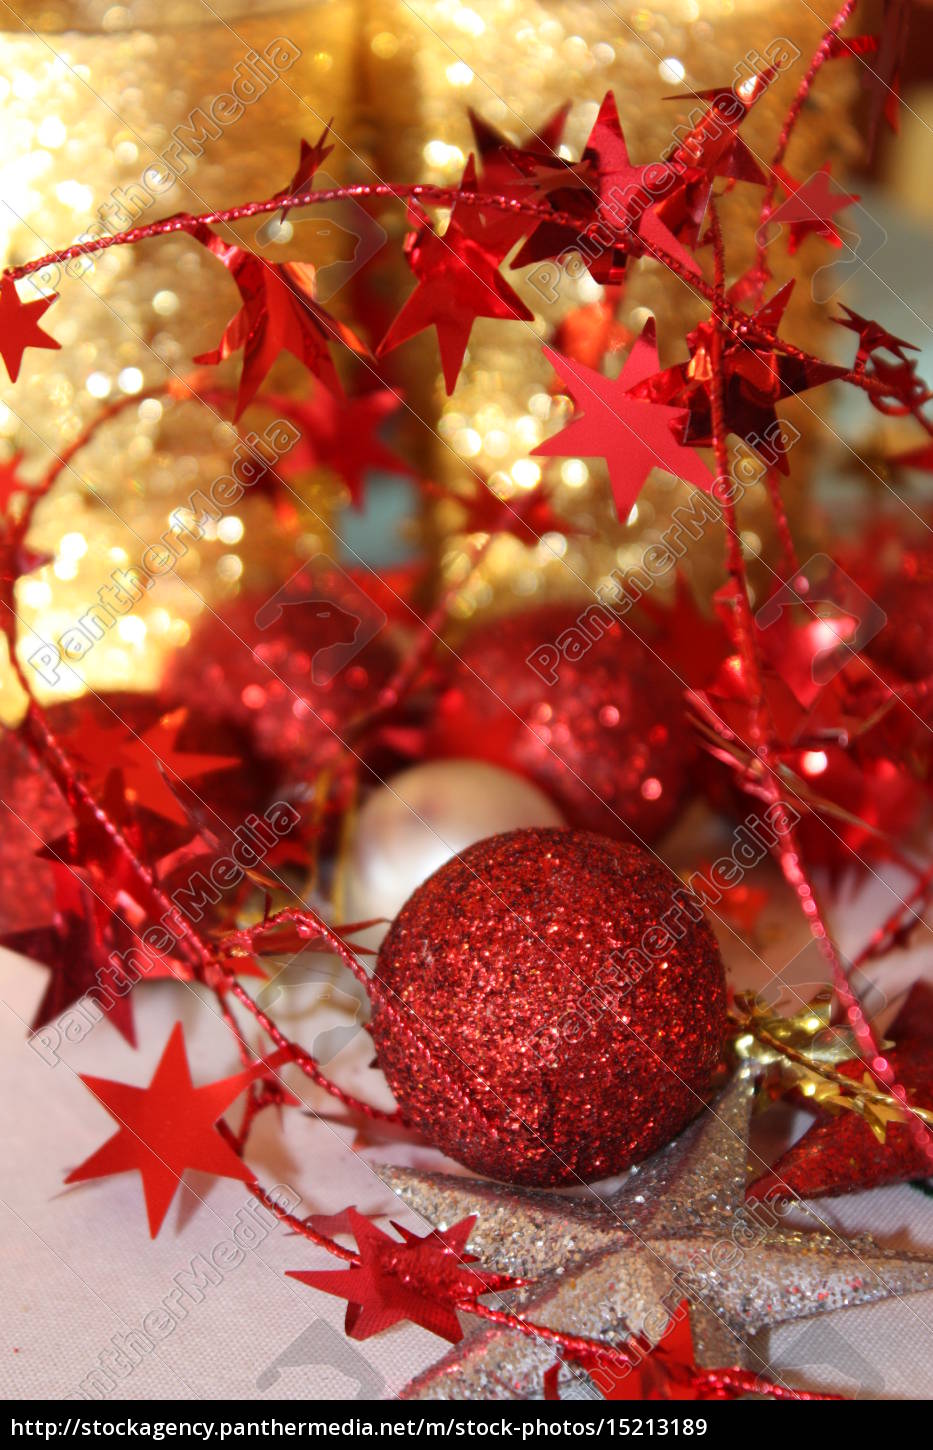 Husarbejde grundigt fragment Jul rød gylden glitter dekoration - Stockphoto #15213189 | PantherMedia  Billedbureau